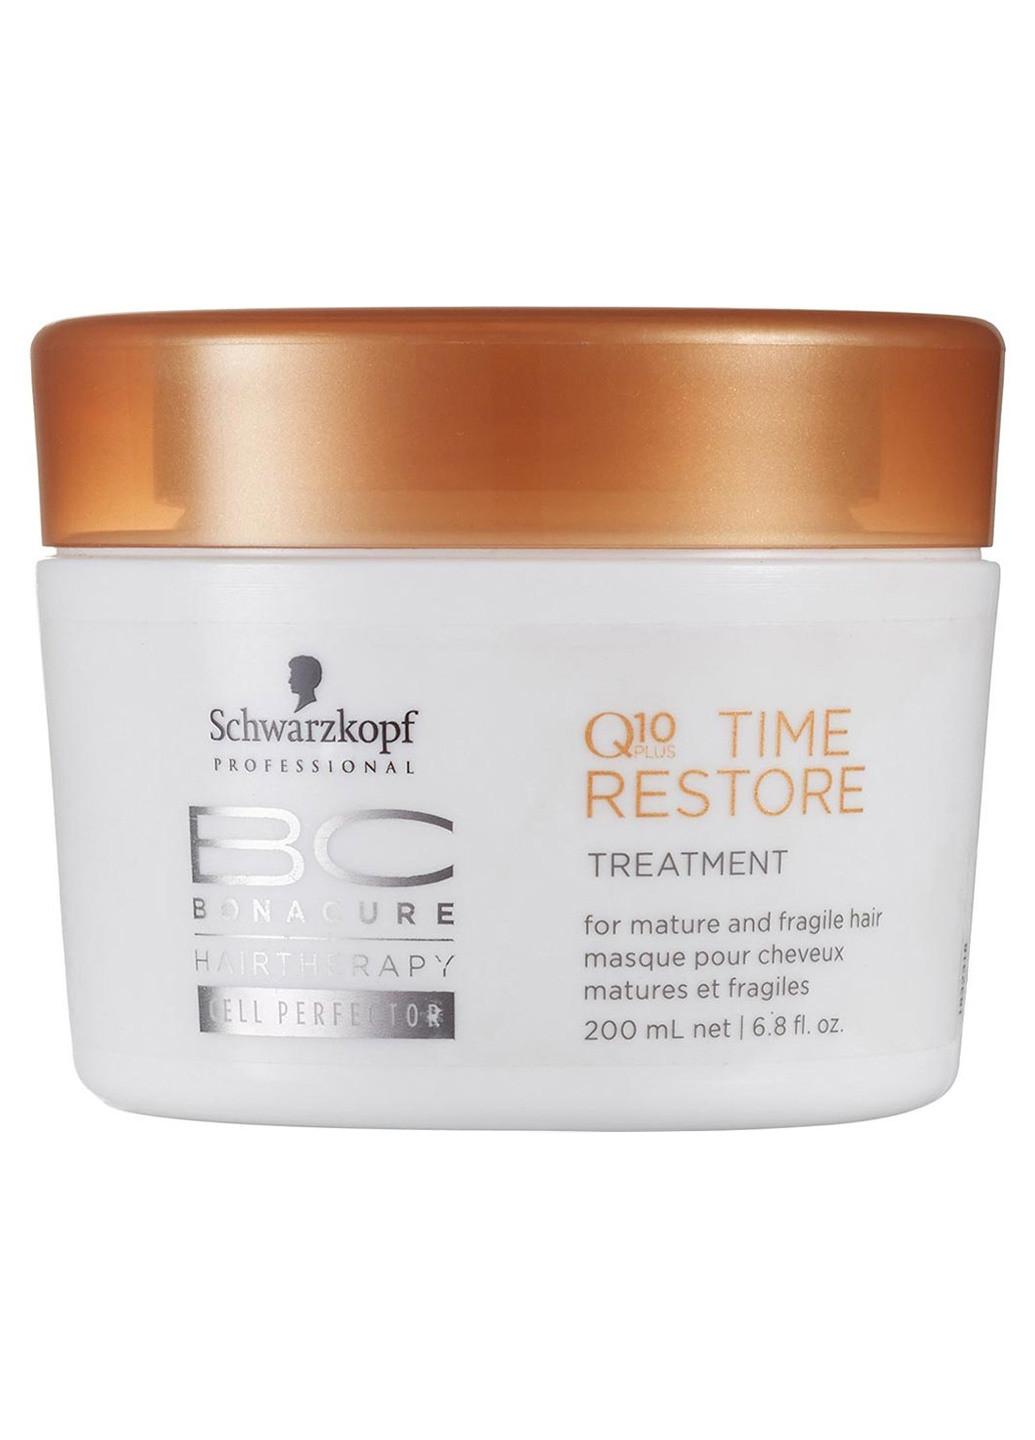 Зміцнююча маска для волосся Q10 ВС Bonacure Time Restore Q10 Plus Treatment 200 мл Schwarzkopf Professional (190302568)